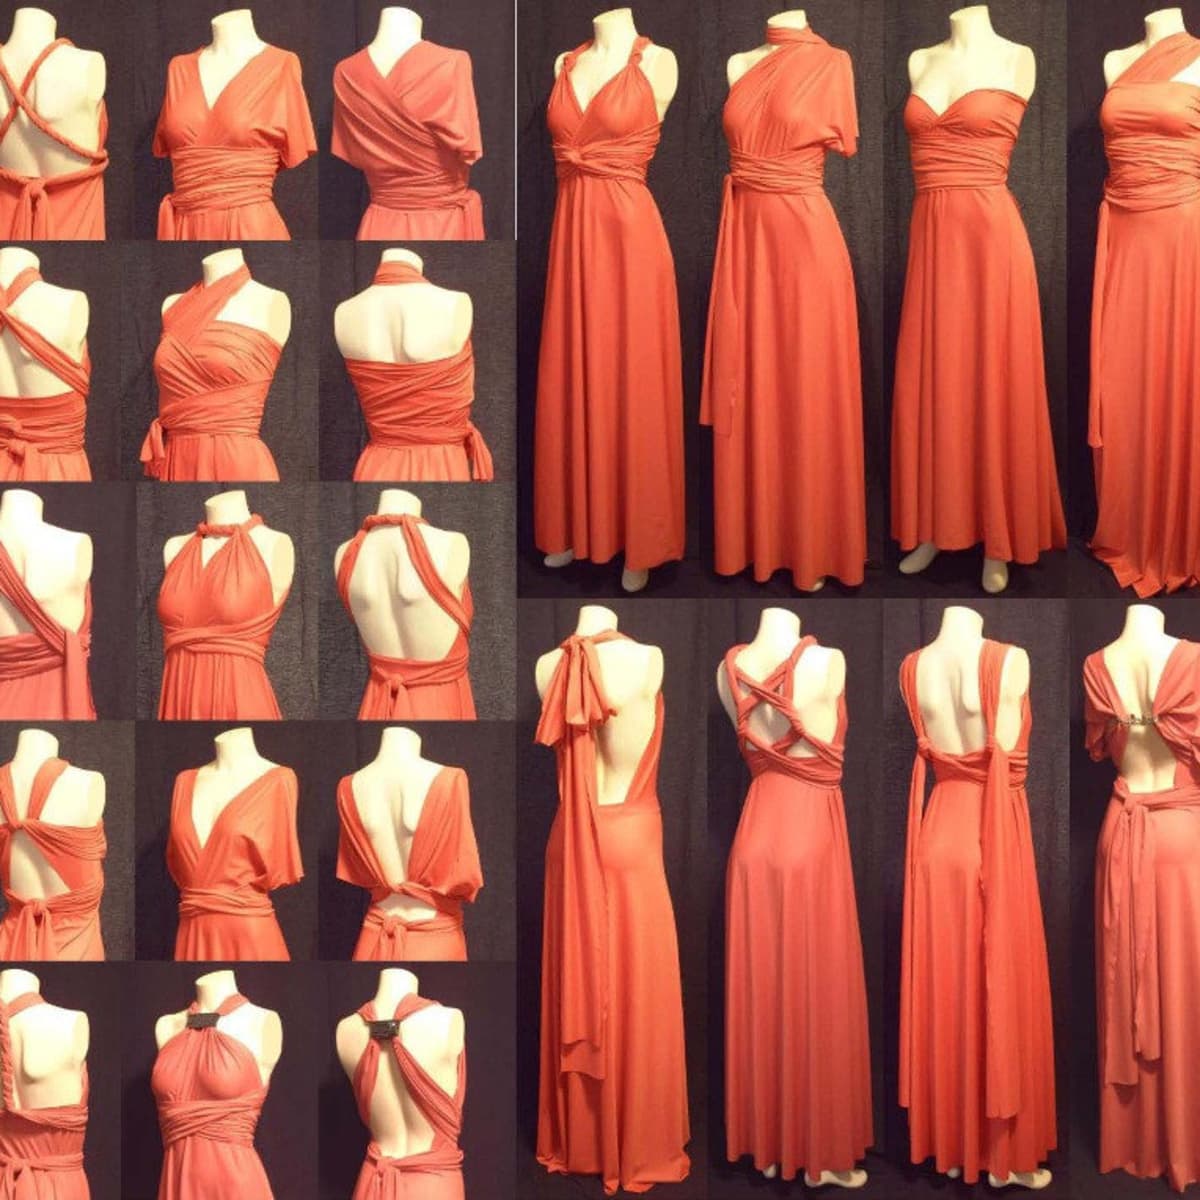 Convertible Bridesmaid Dresses: 7 Ways To Wear A Maxi Dress